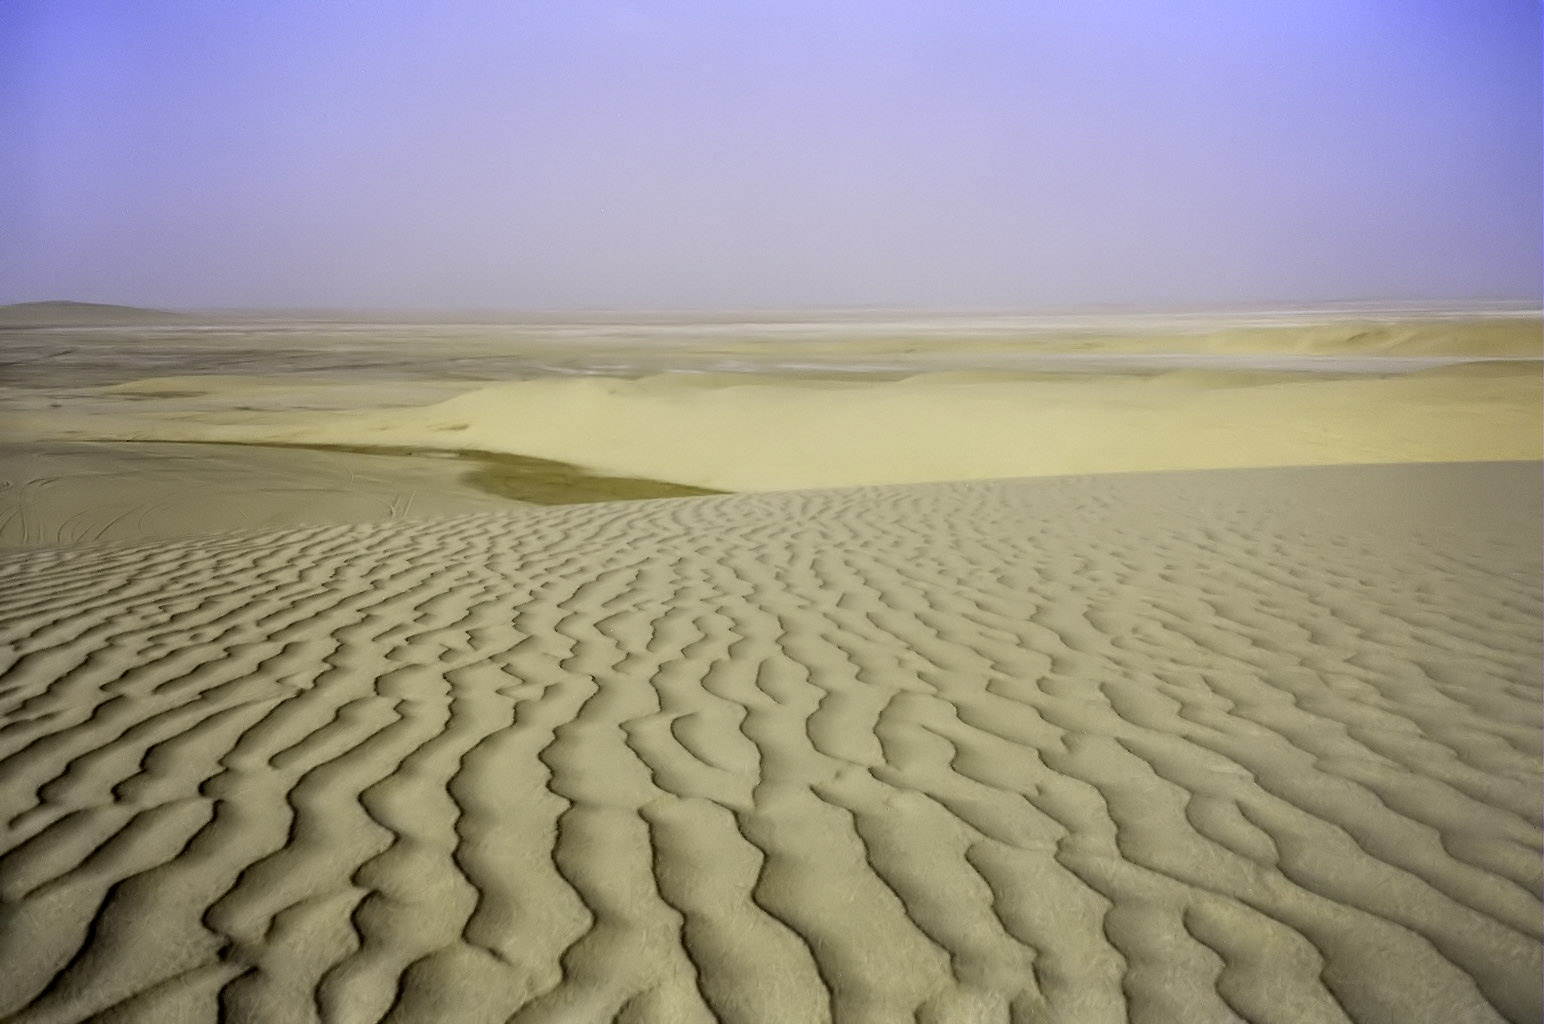 Desert Landscape in Qatar image - Free stock photo - Public Domain